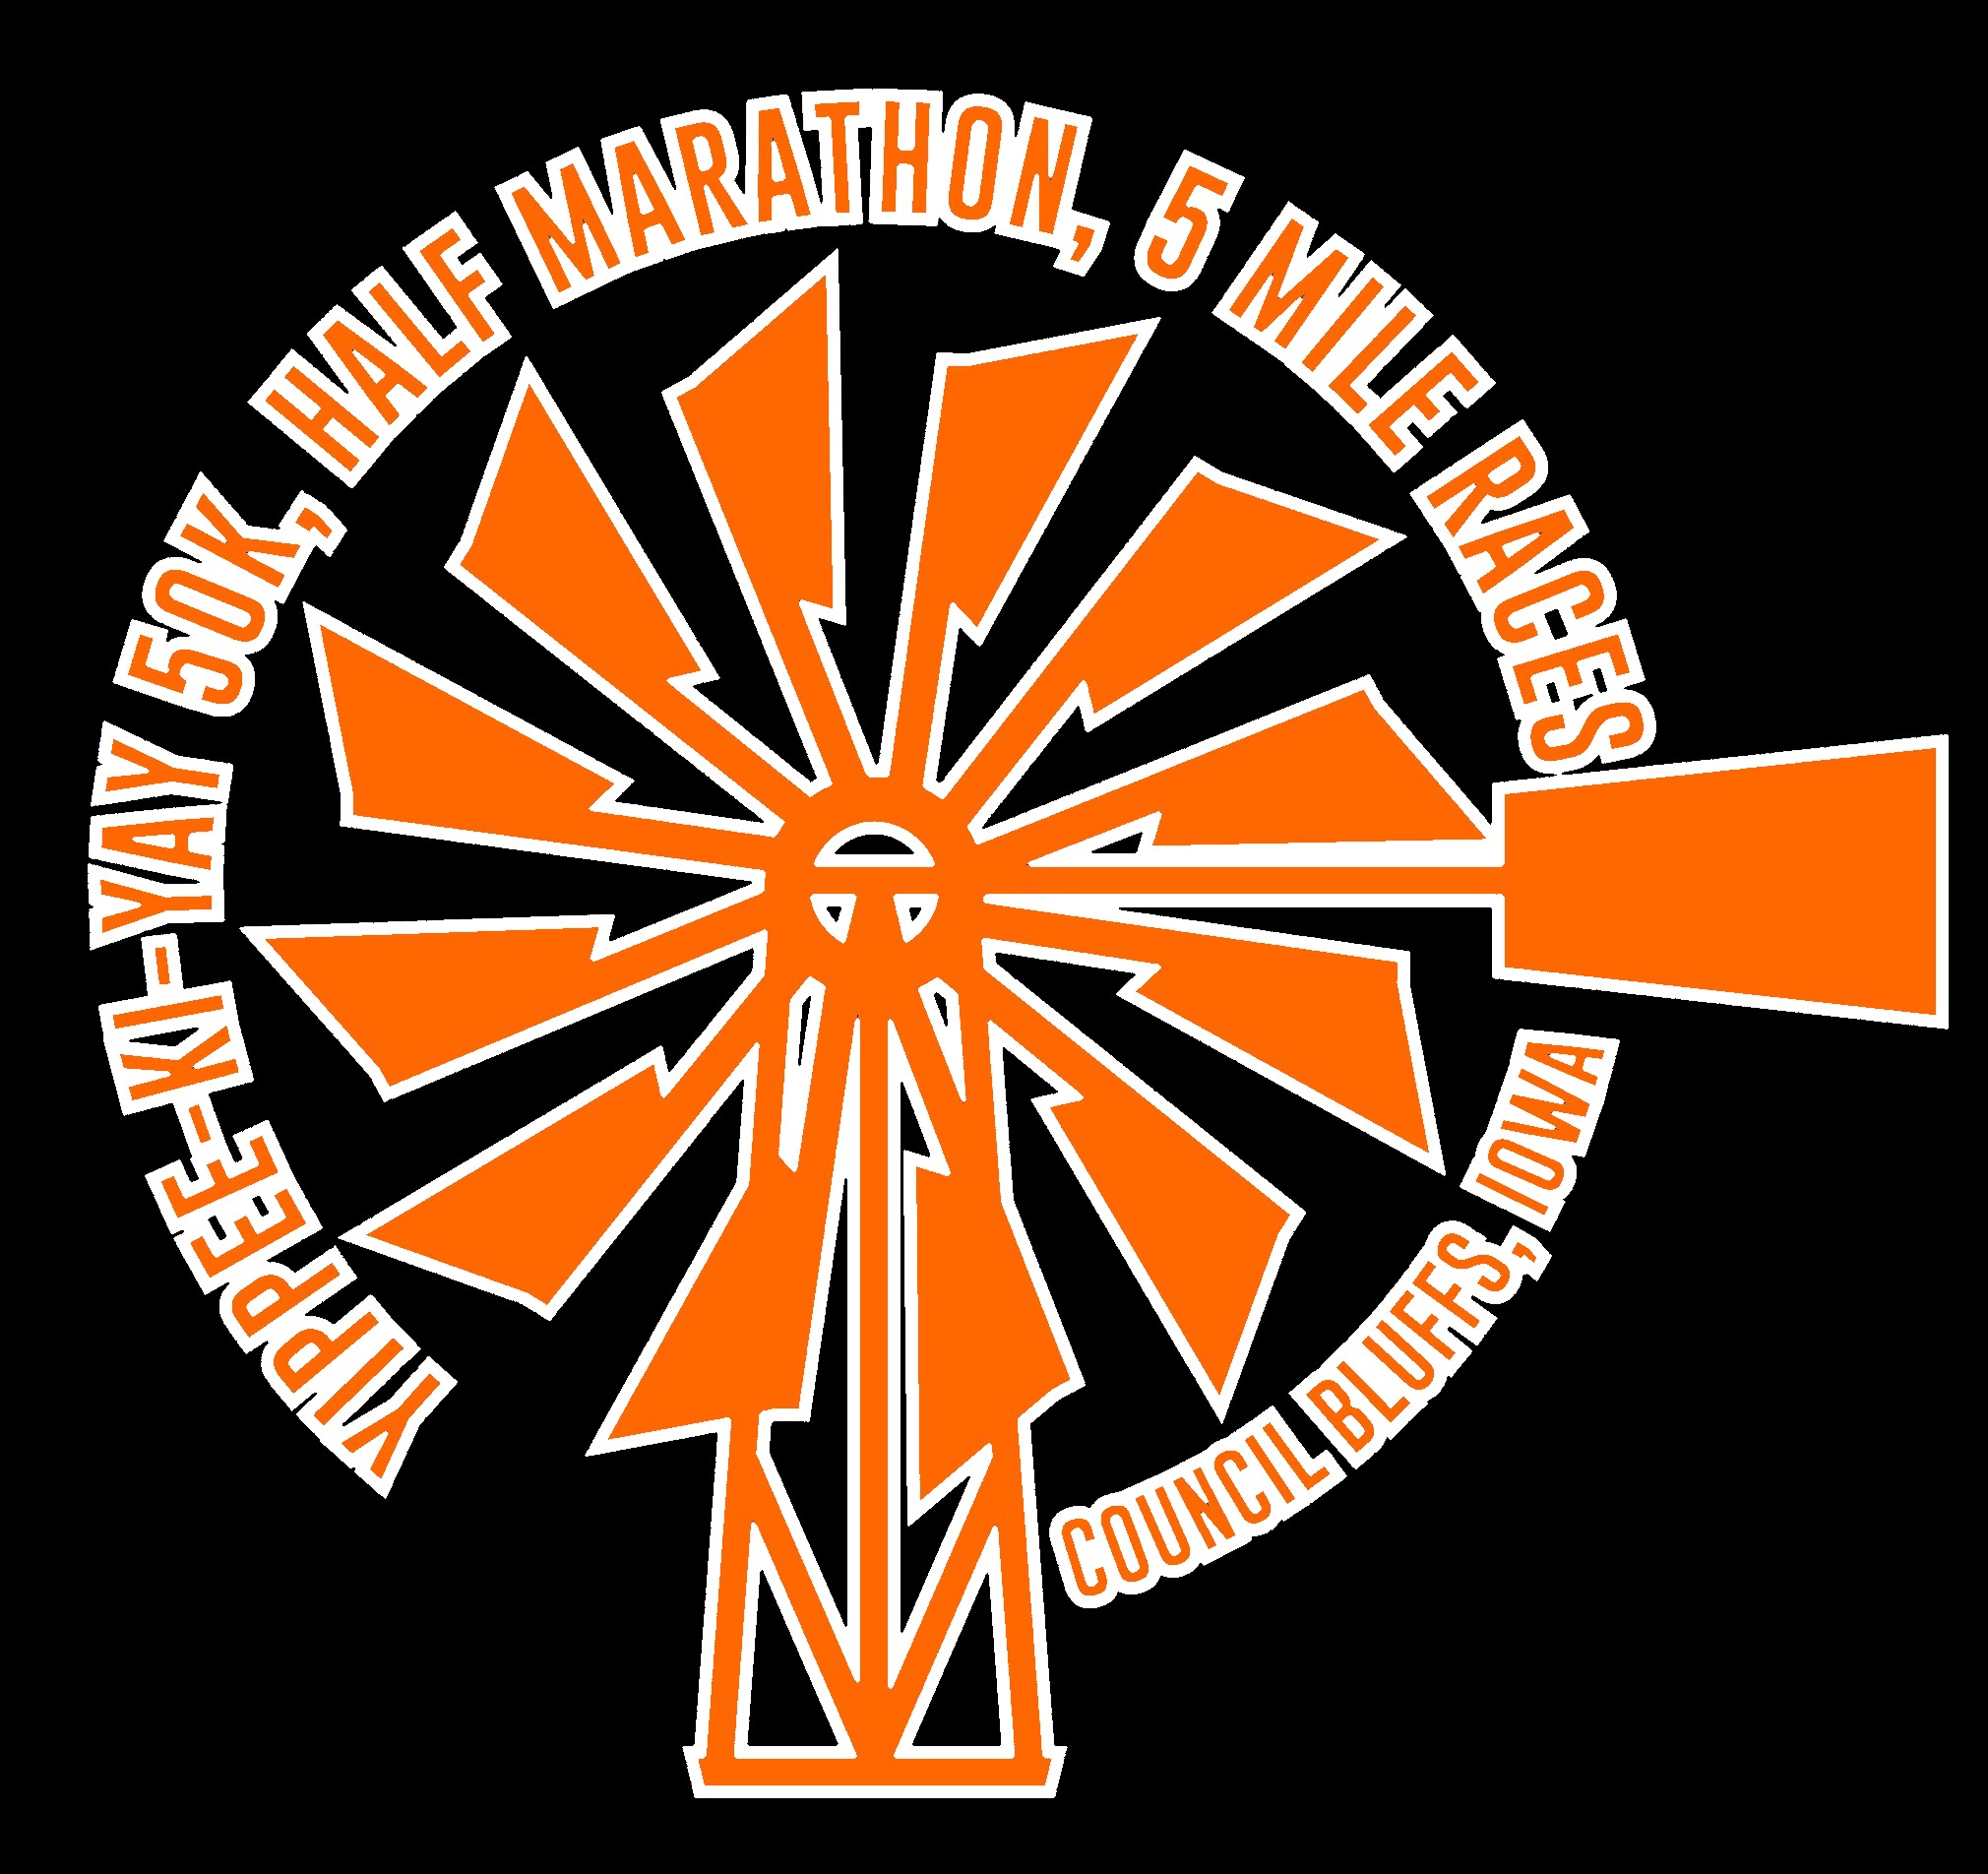 Yippee-Ki-Yay 50K, Half Marathon & 5 Miler logo on RaceRaves